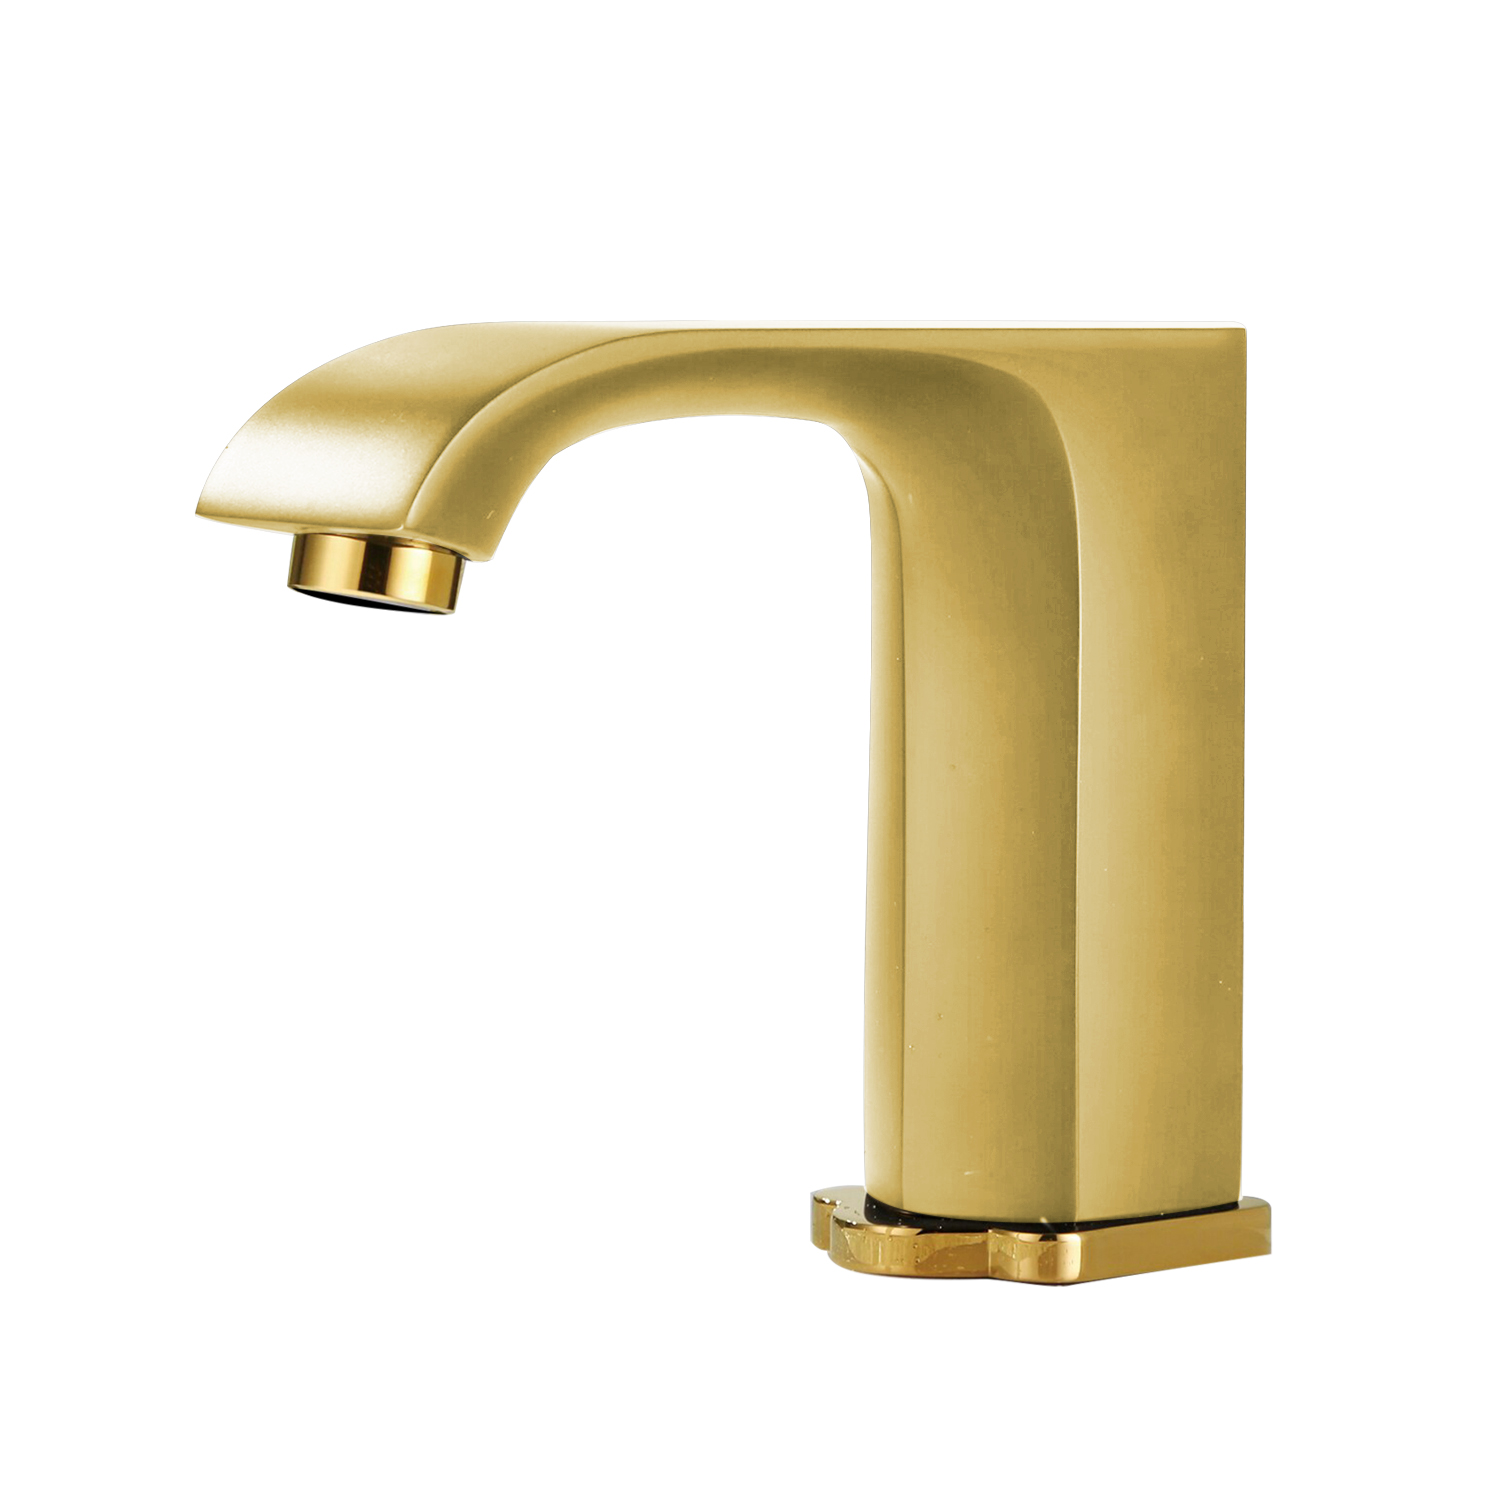 Fontana-Brushed-Gold-Automatic-Sensor-B